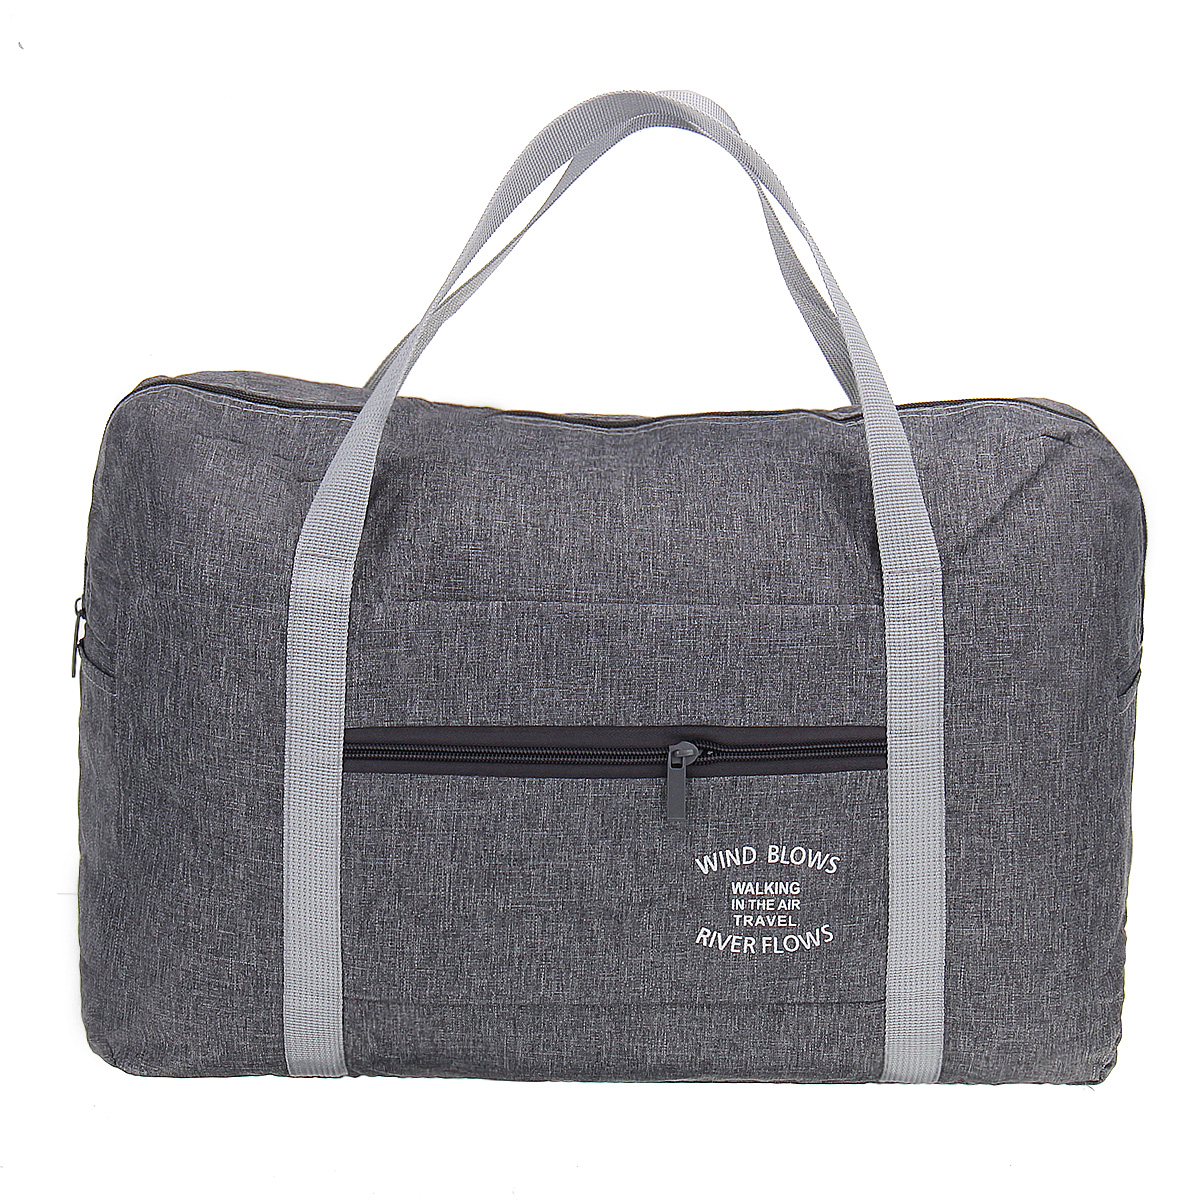 Oxford-Cloth-40x30x13cm-Foldable-Travel-Storage-Bag-Waterproof--Luggage-Bag-Hand-Shoulder-Bag-Carry--1667293-2